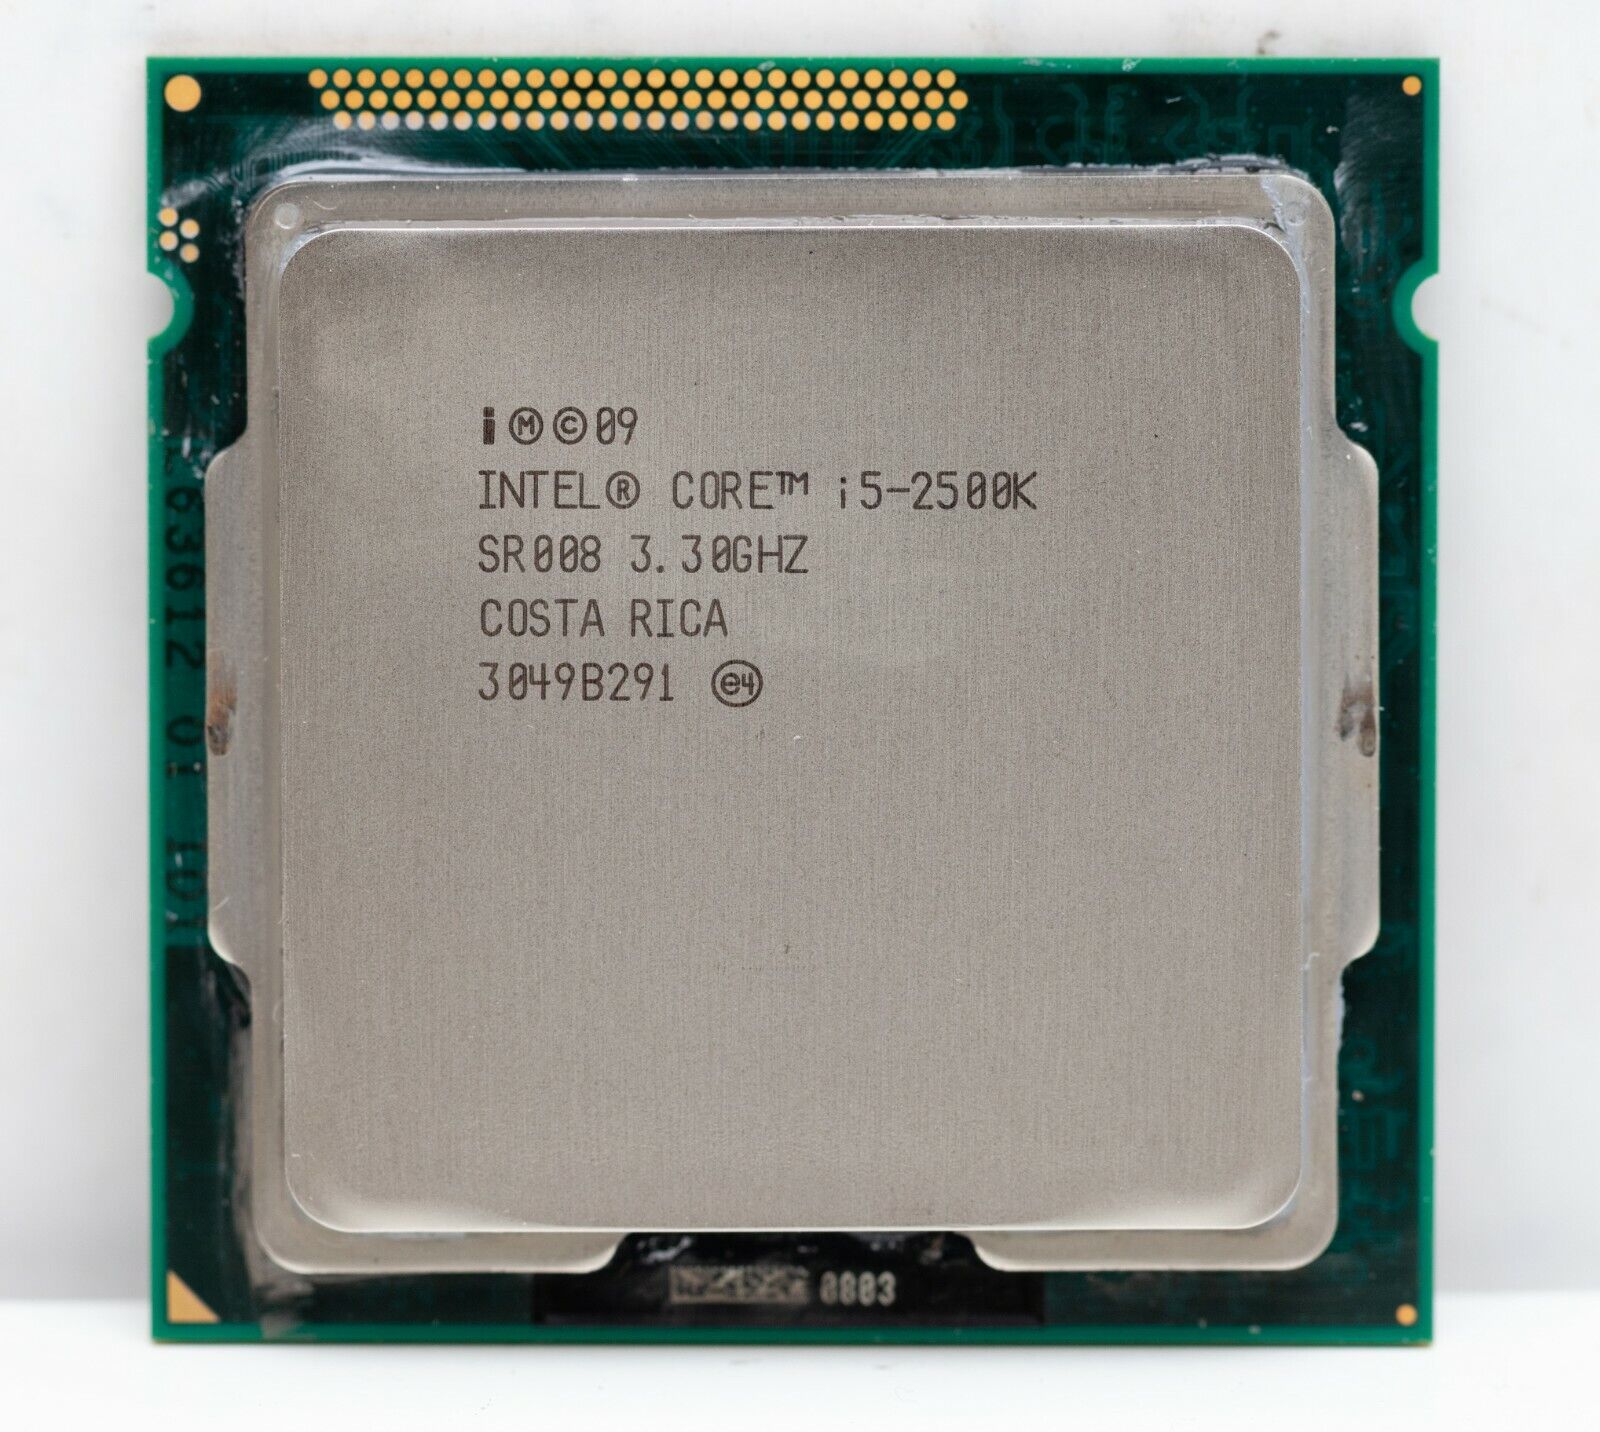 Intel Core i5-2500K Sandy Bridge Quad-Core 3.3GHz LGA 1155 95W Desktop Processor